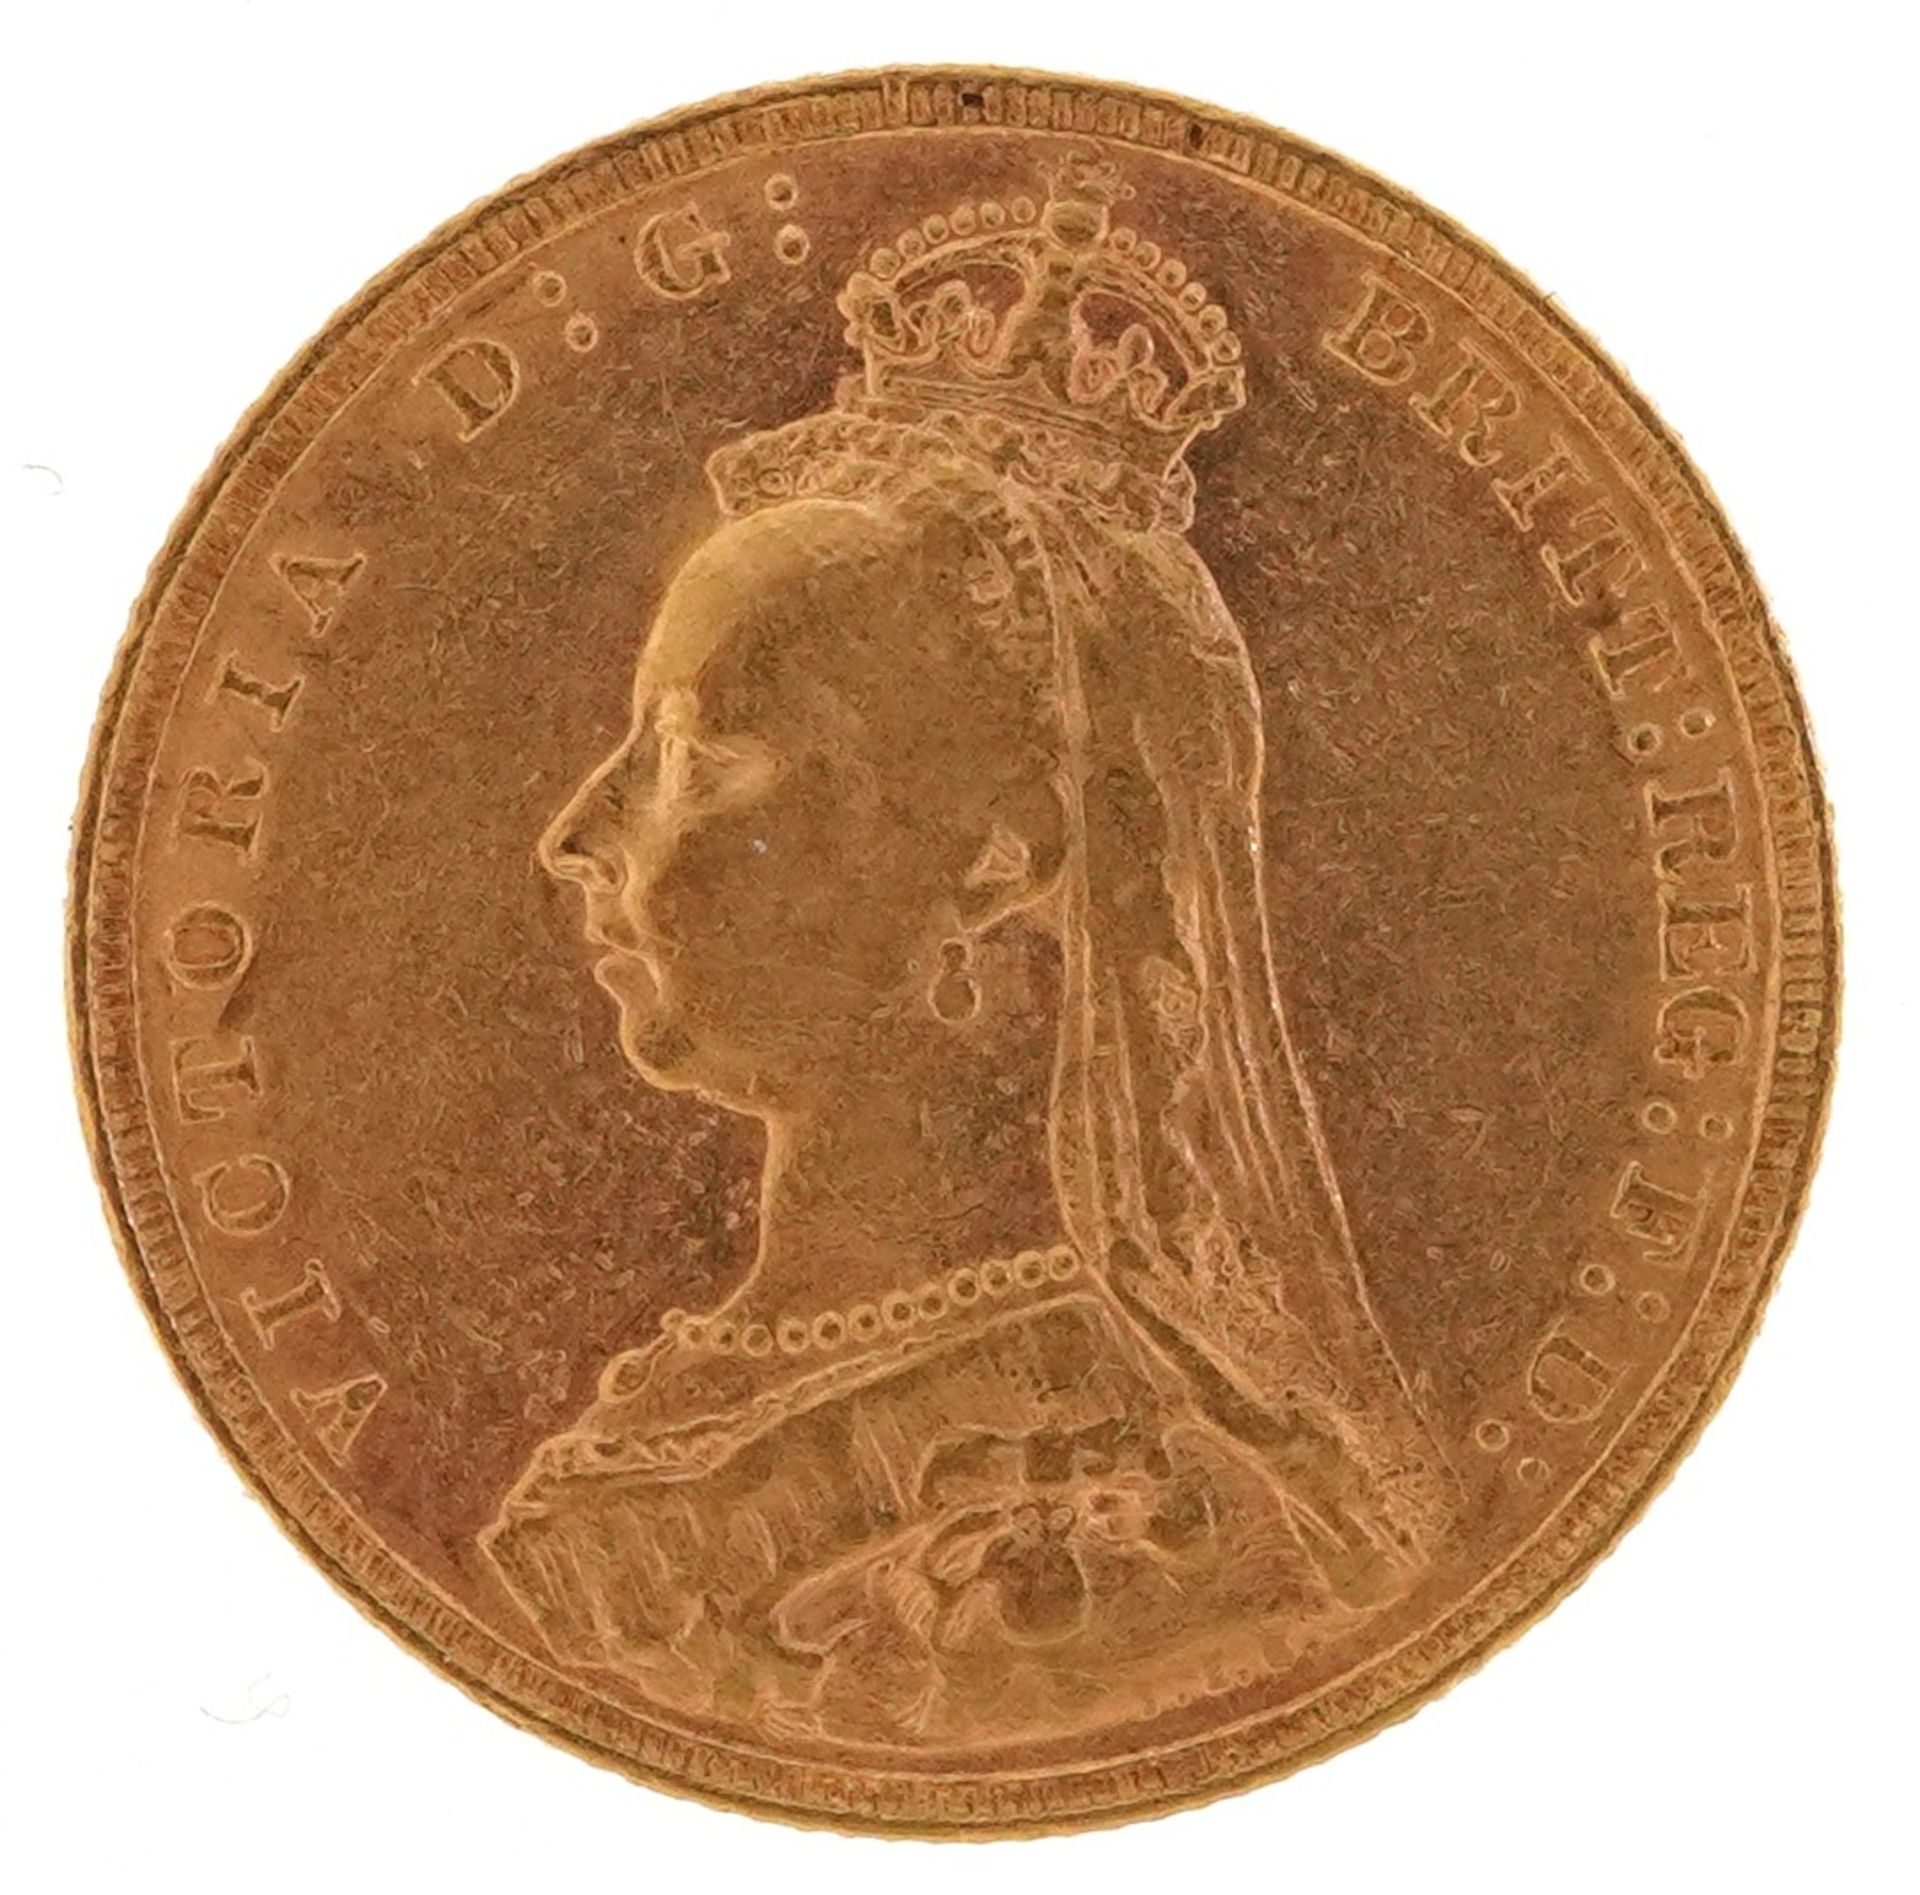 Queen Victoria Jubilee Head 1891 gold sovereign - Image 2 of 3